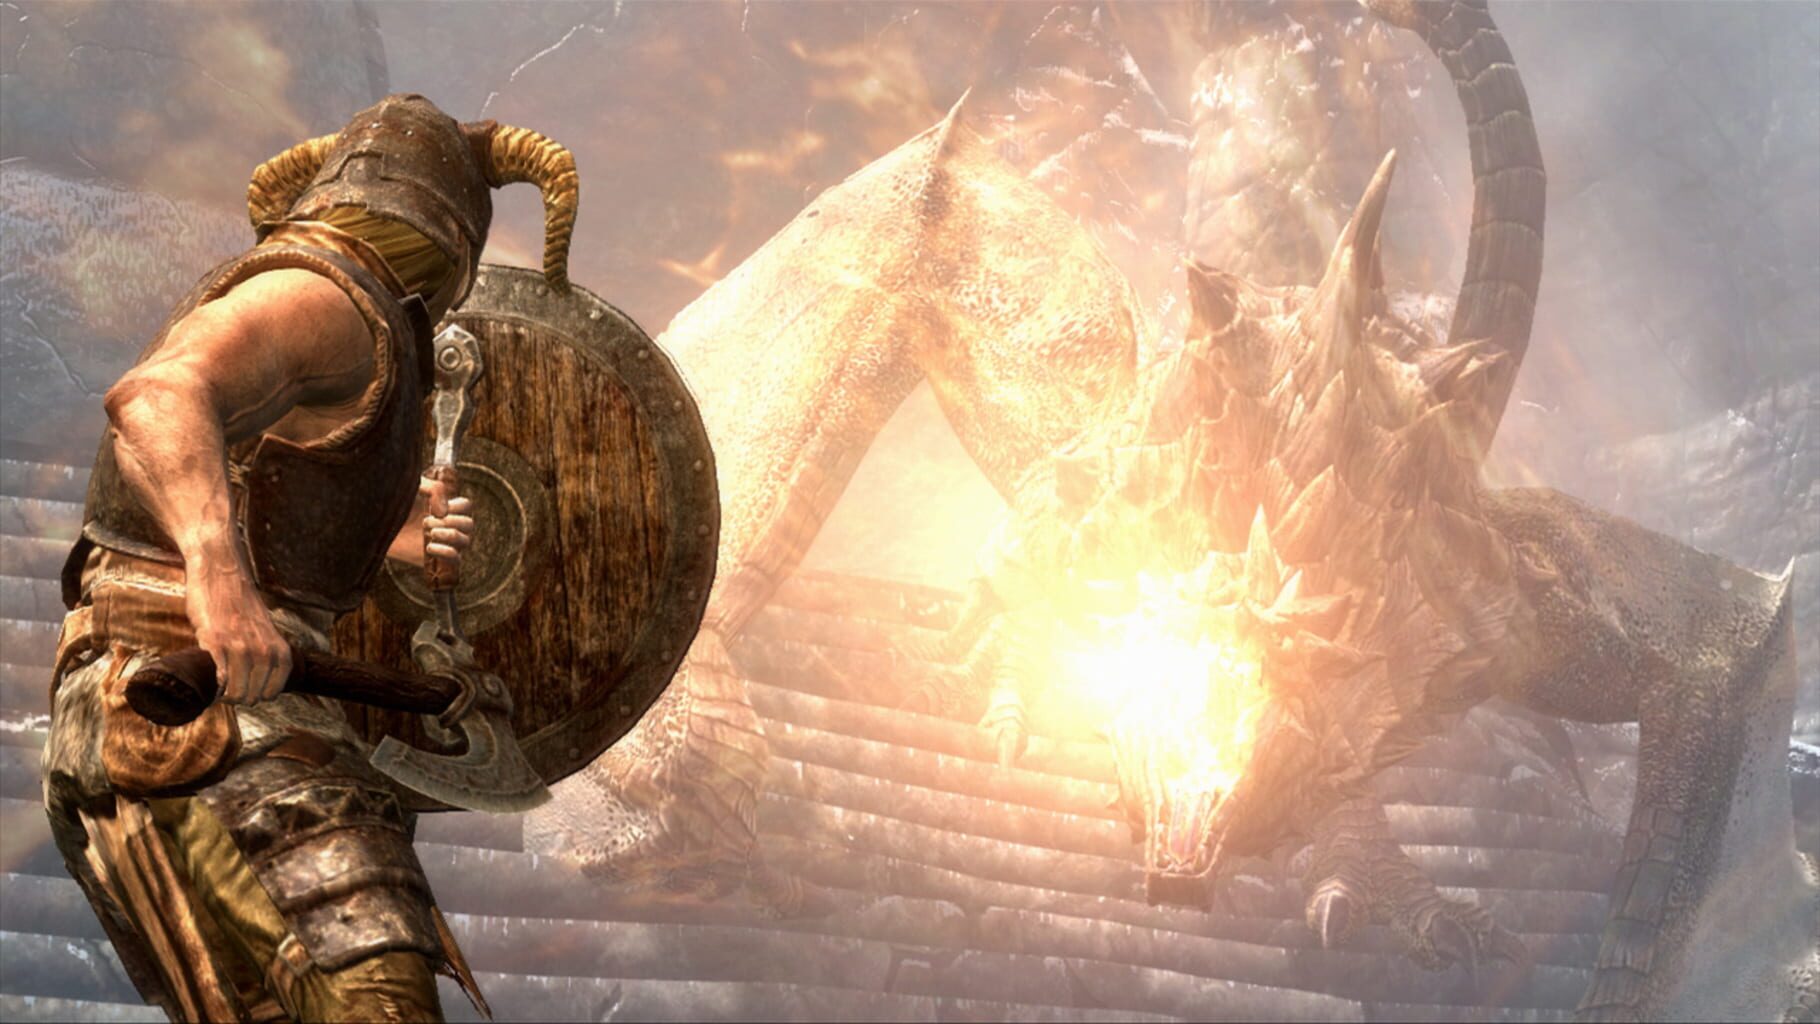 The Elder Scrolls V: Skyrim screenshots